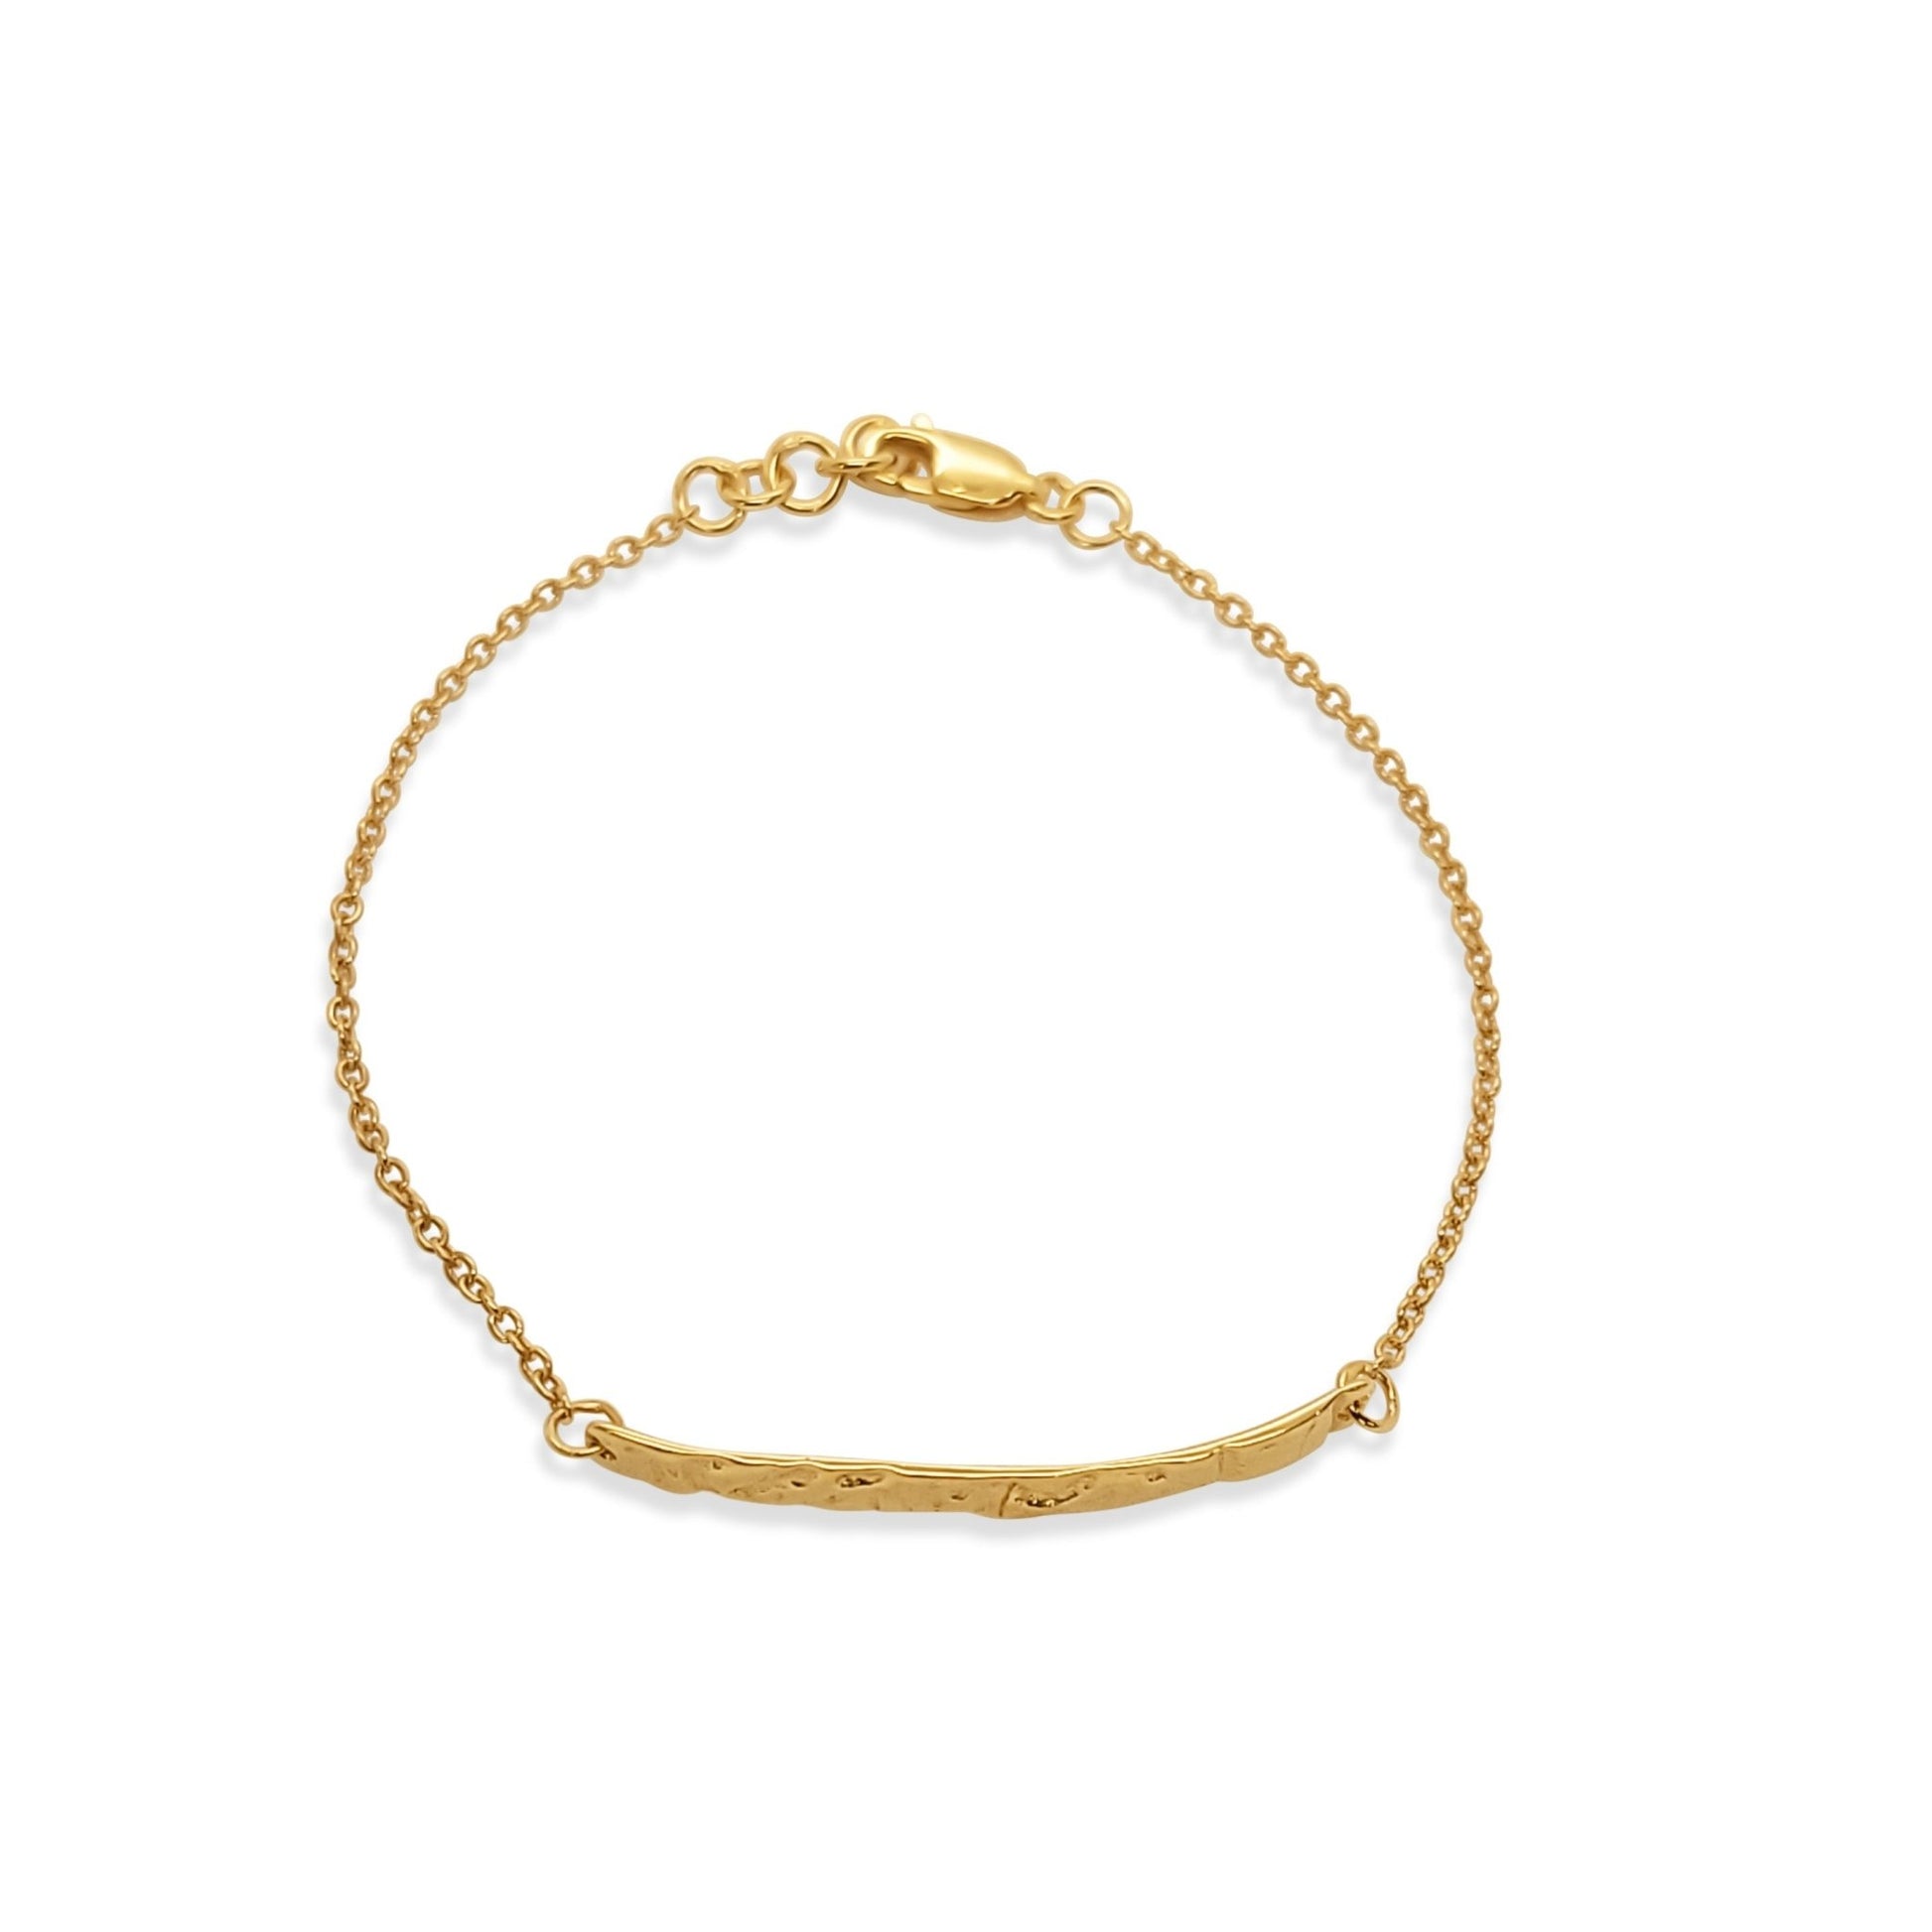 gold vermeil Kayla adjustable bracelet with natural wood texture